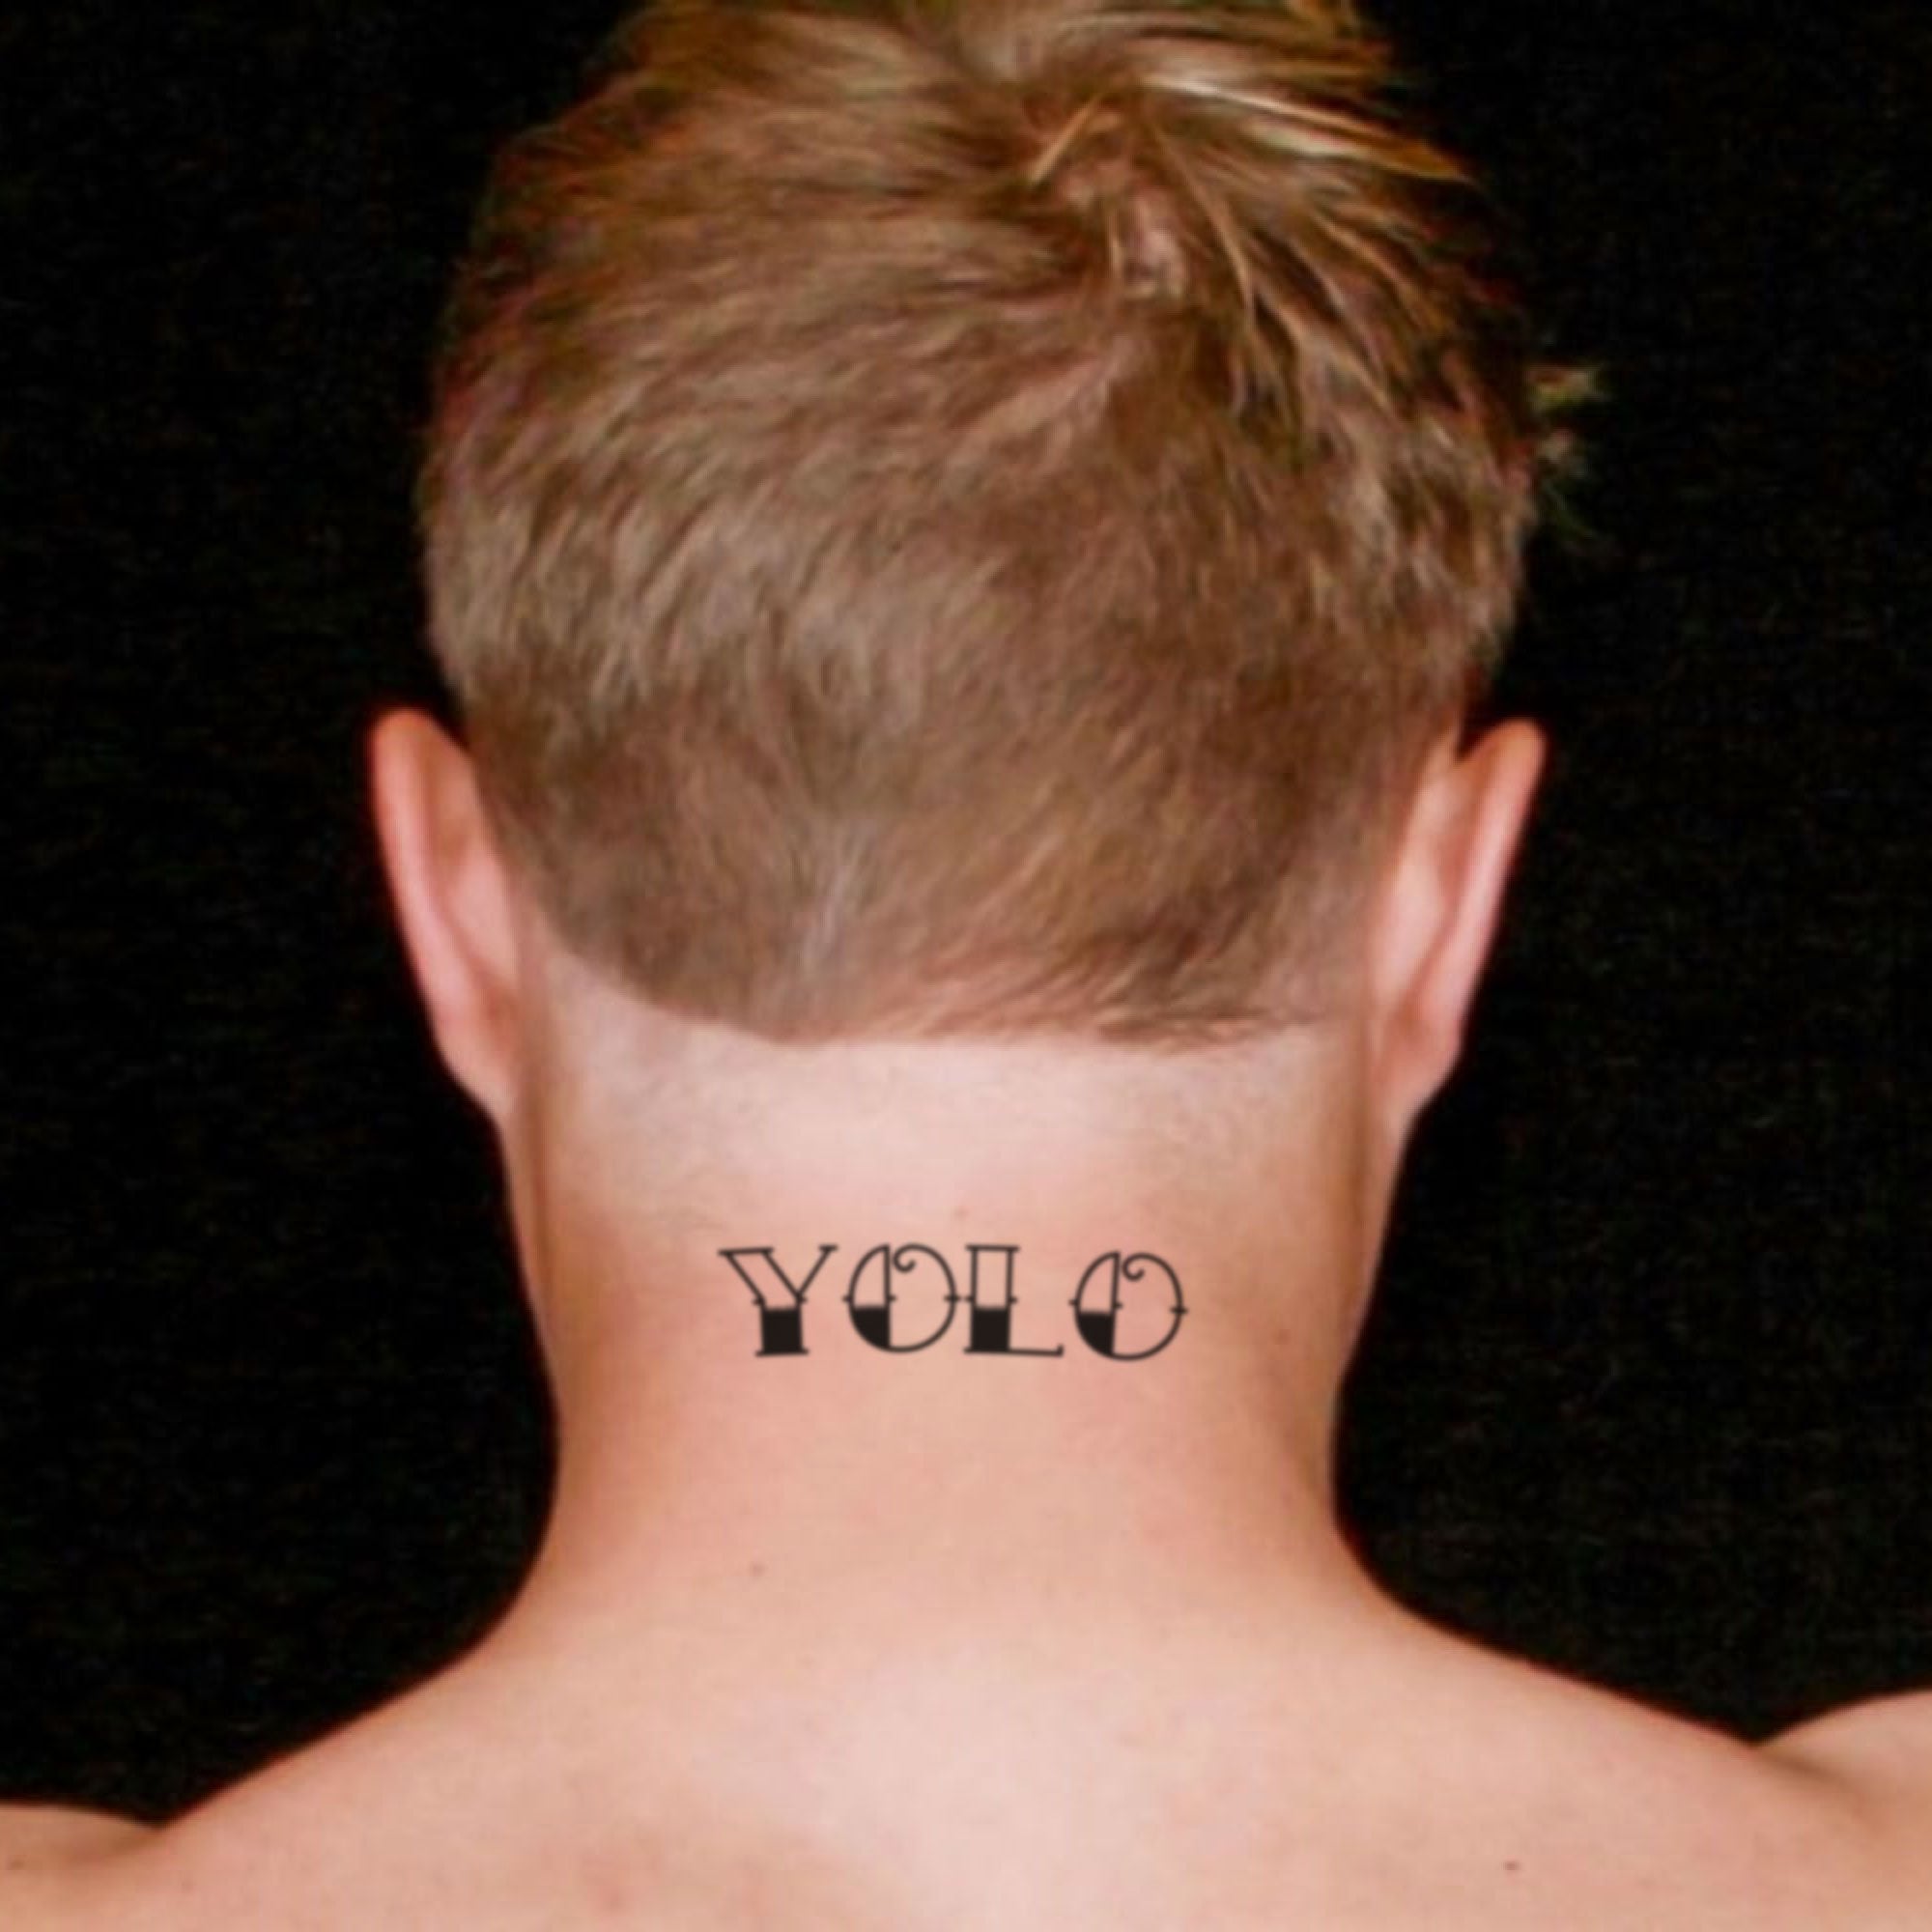 YOLO - You Only Live Once Acronym Temporary Tattoo Sticker - OhMyTat